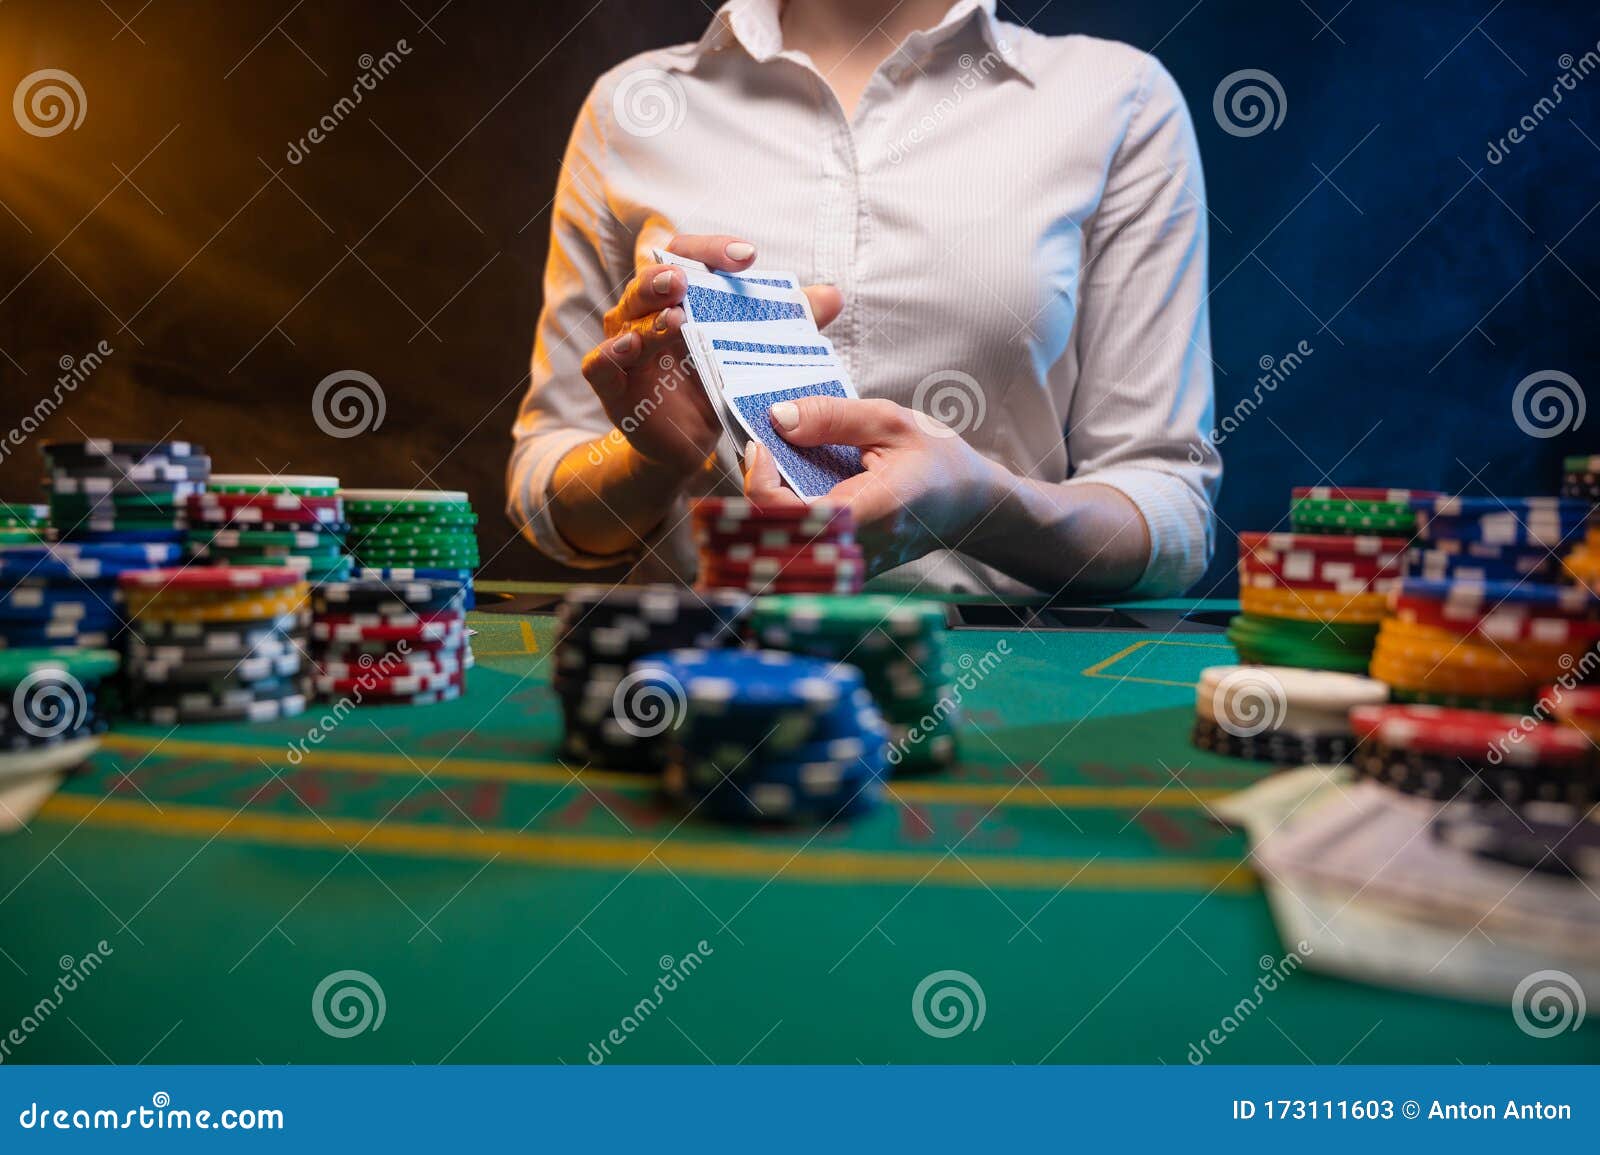 Why I Hate казино